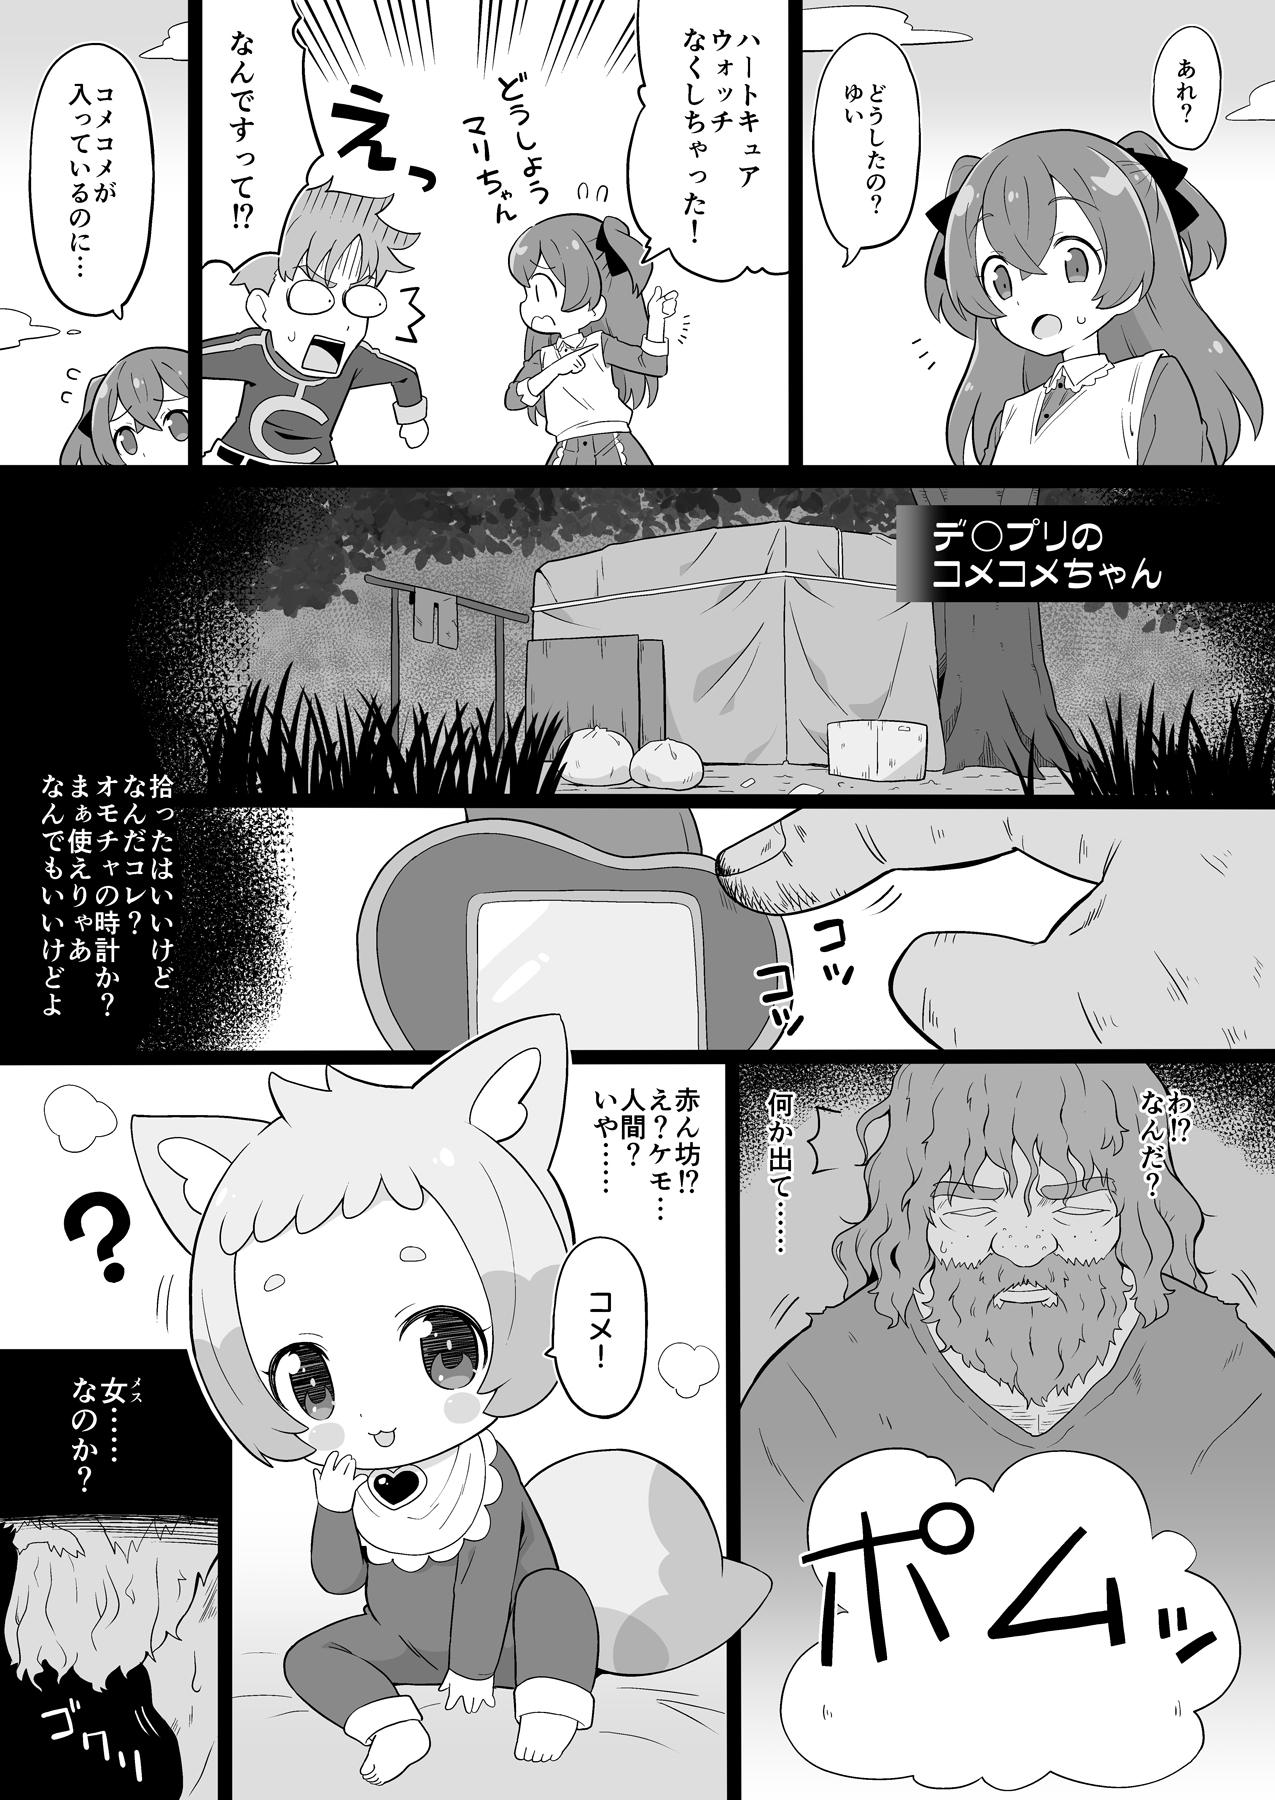 Tease FAN Box Manga Matome Hon - The idolmaster Tate no yuusha no nariagari | the rising of the shield hero Bitch - Page 10